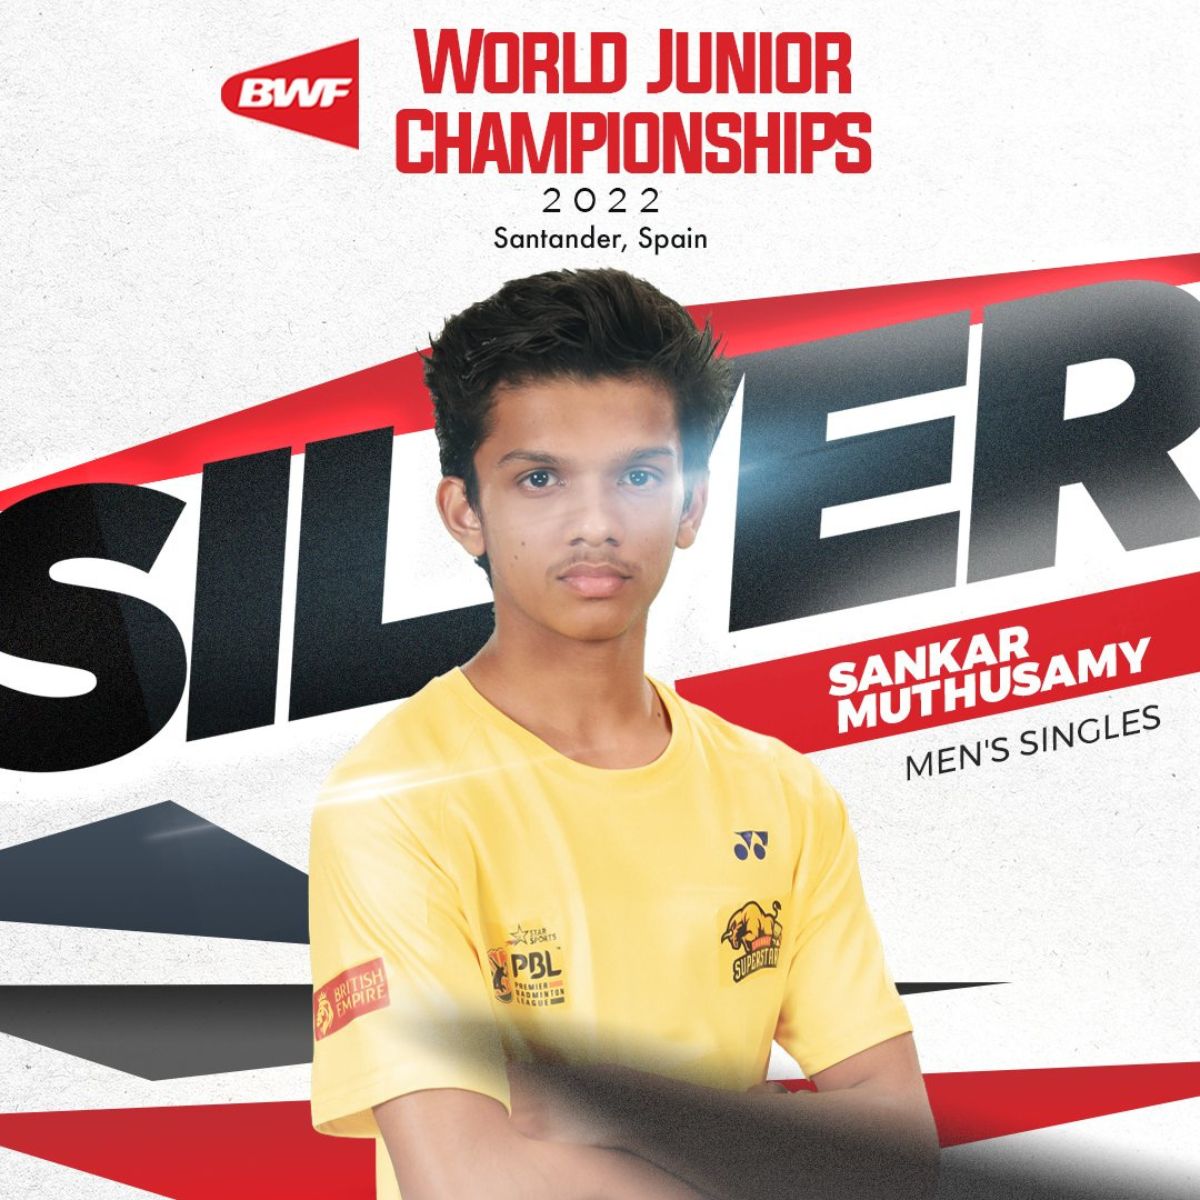 Sankar muthaswamy wins Silver at the BWF juniors